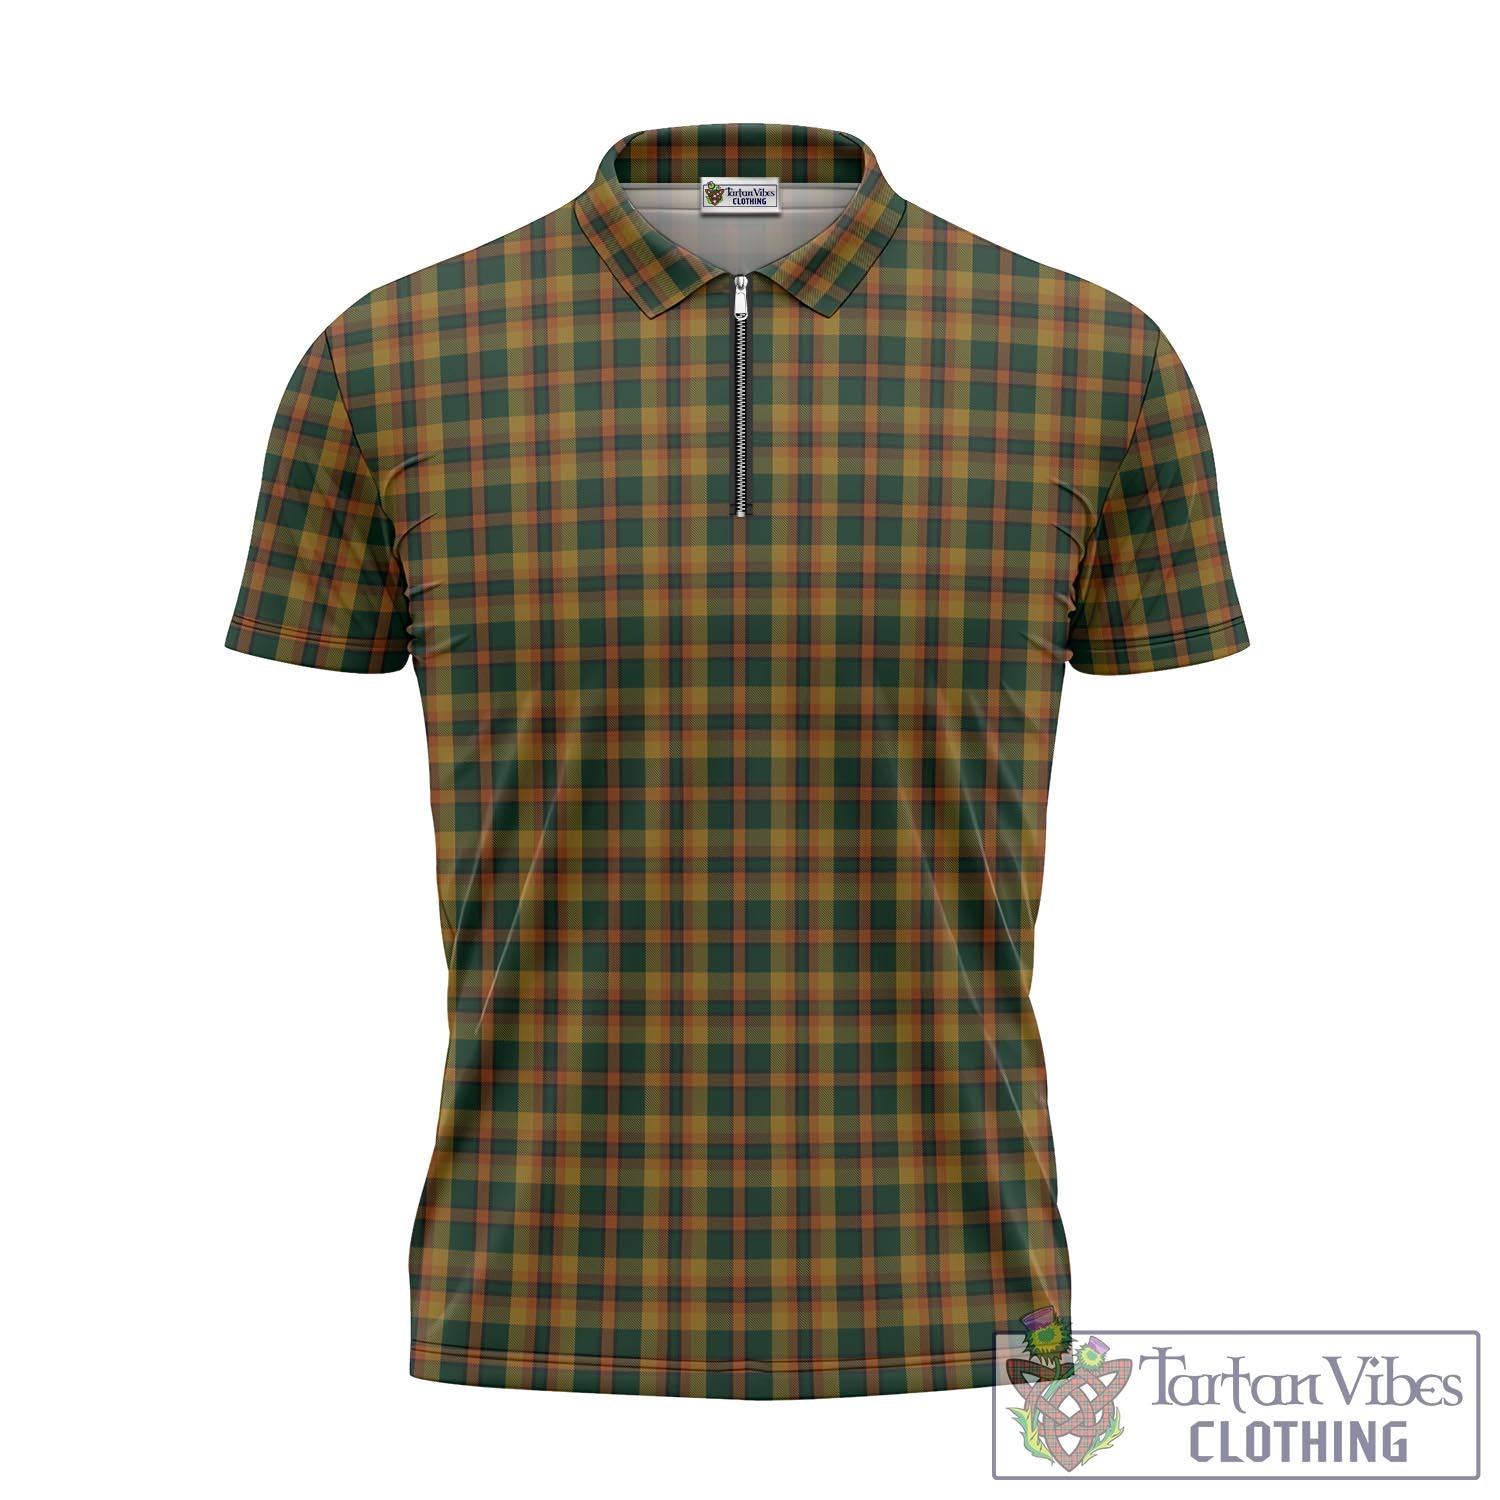 Tartan Vibes Clothing Londonderry (Derry) County Ireland Tartan Zipper Polo Shirt